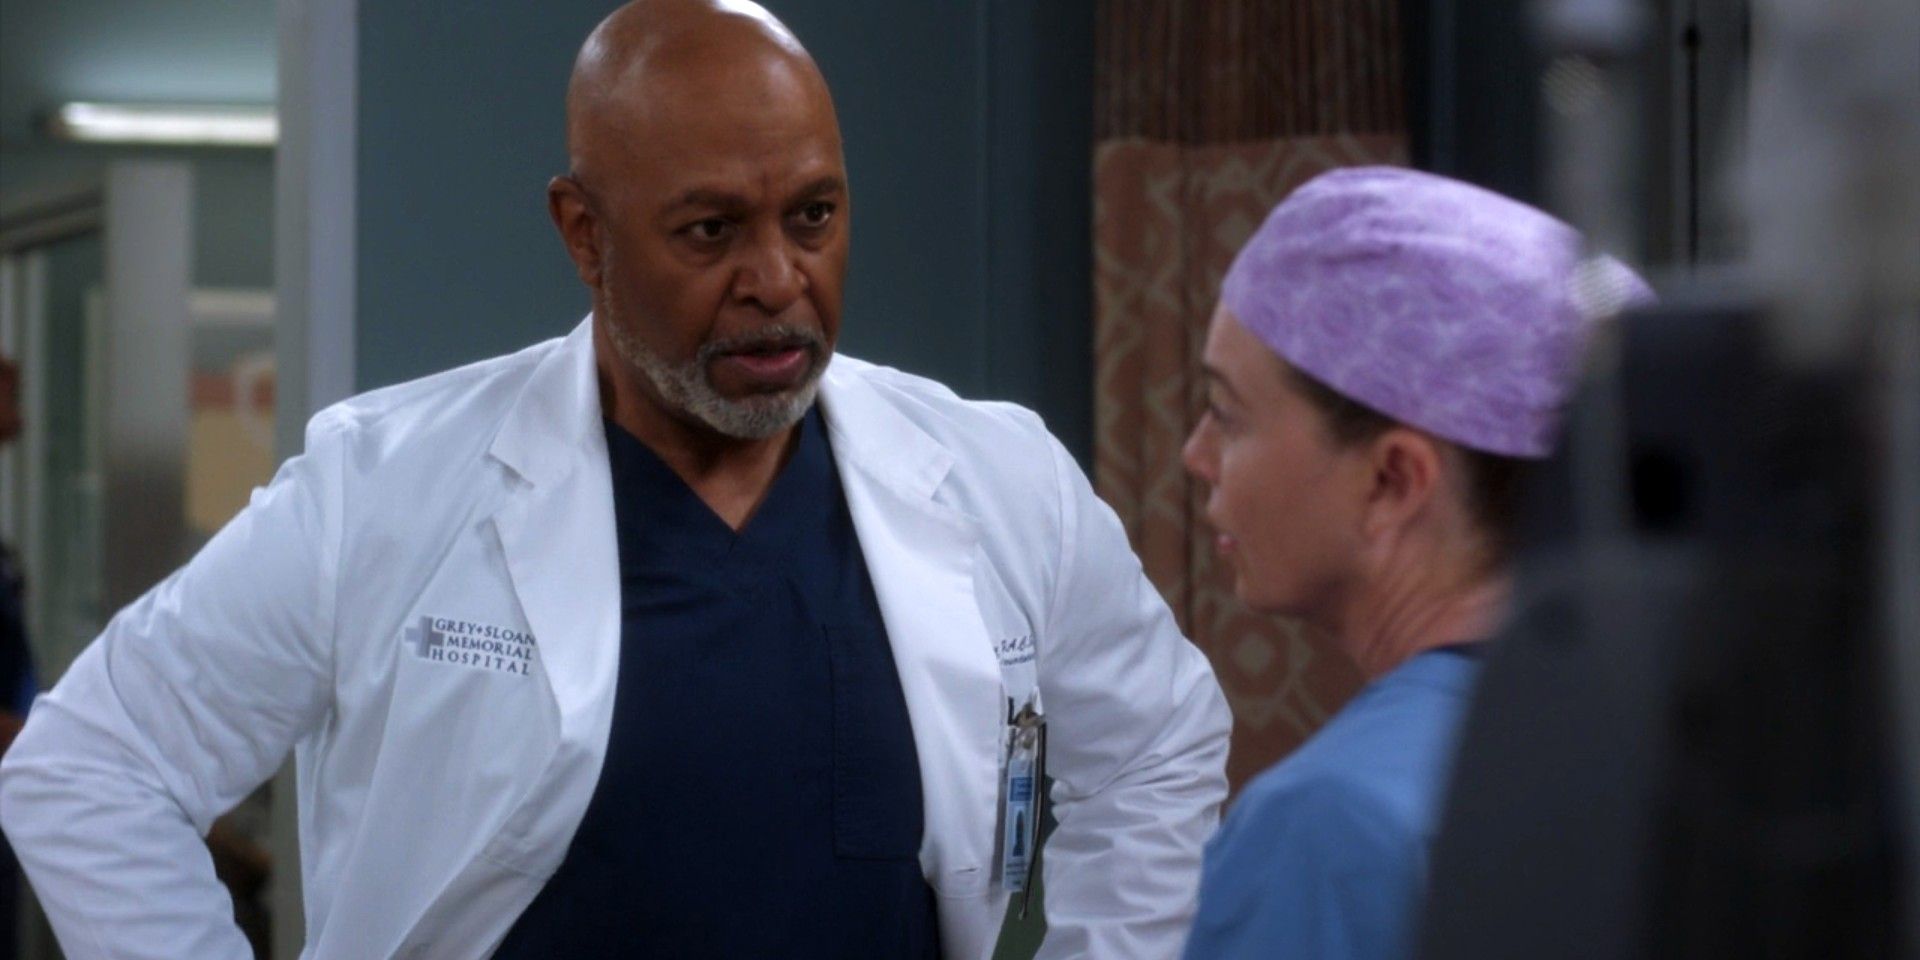 Richard talking to Meredith in Greys Anatomy